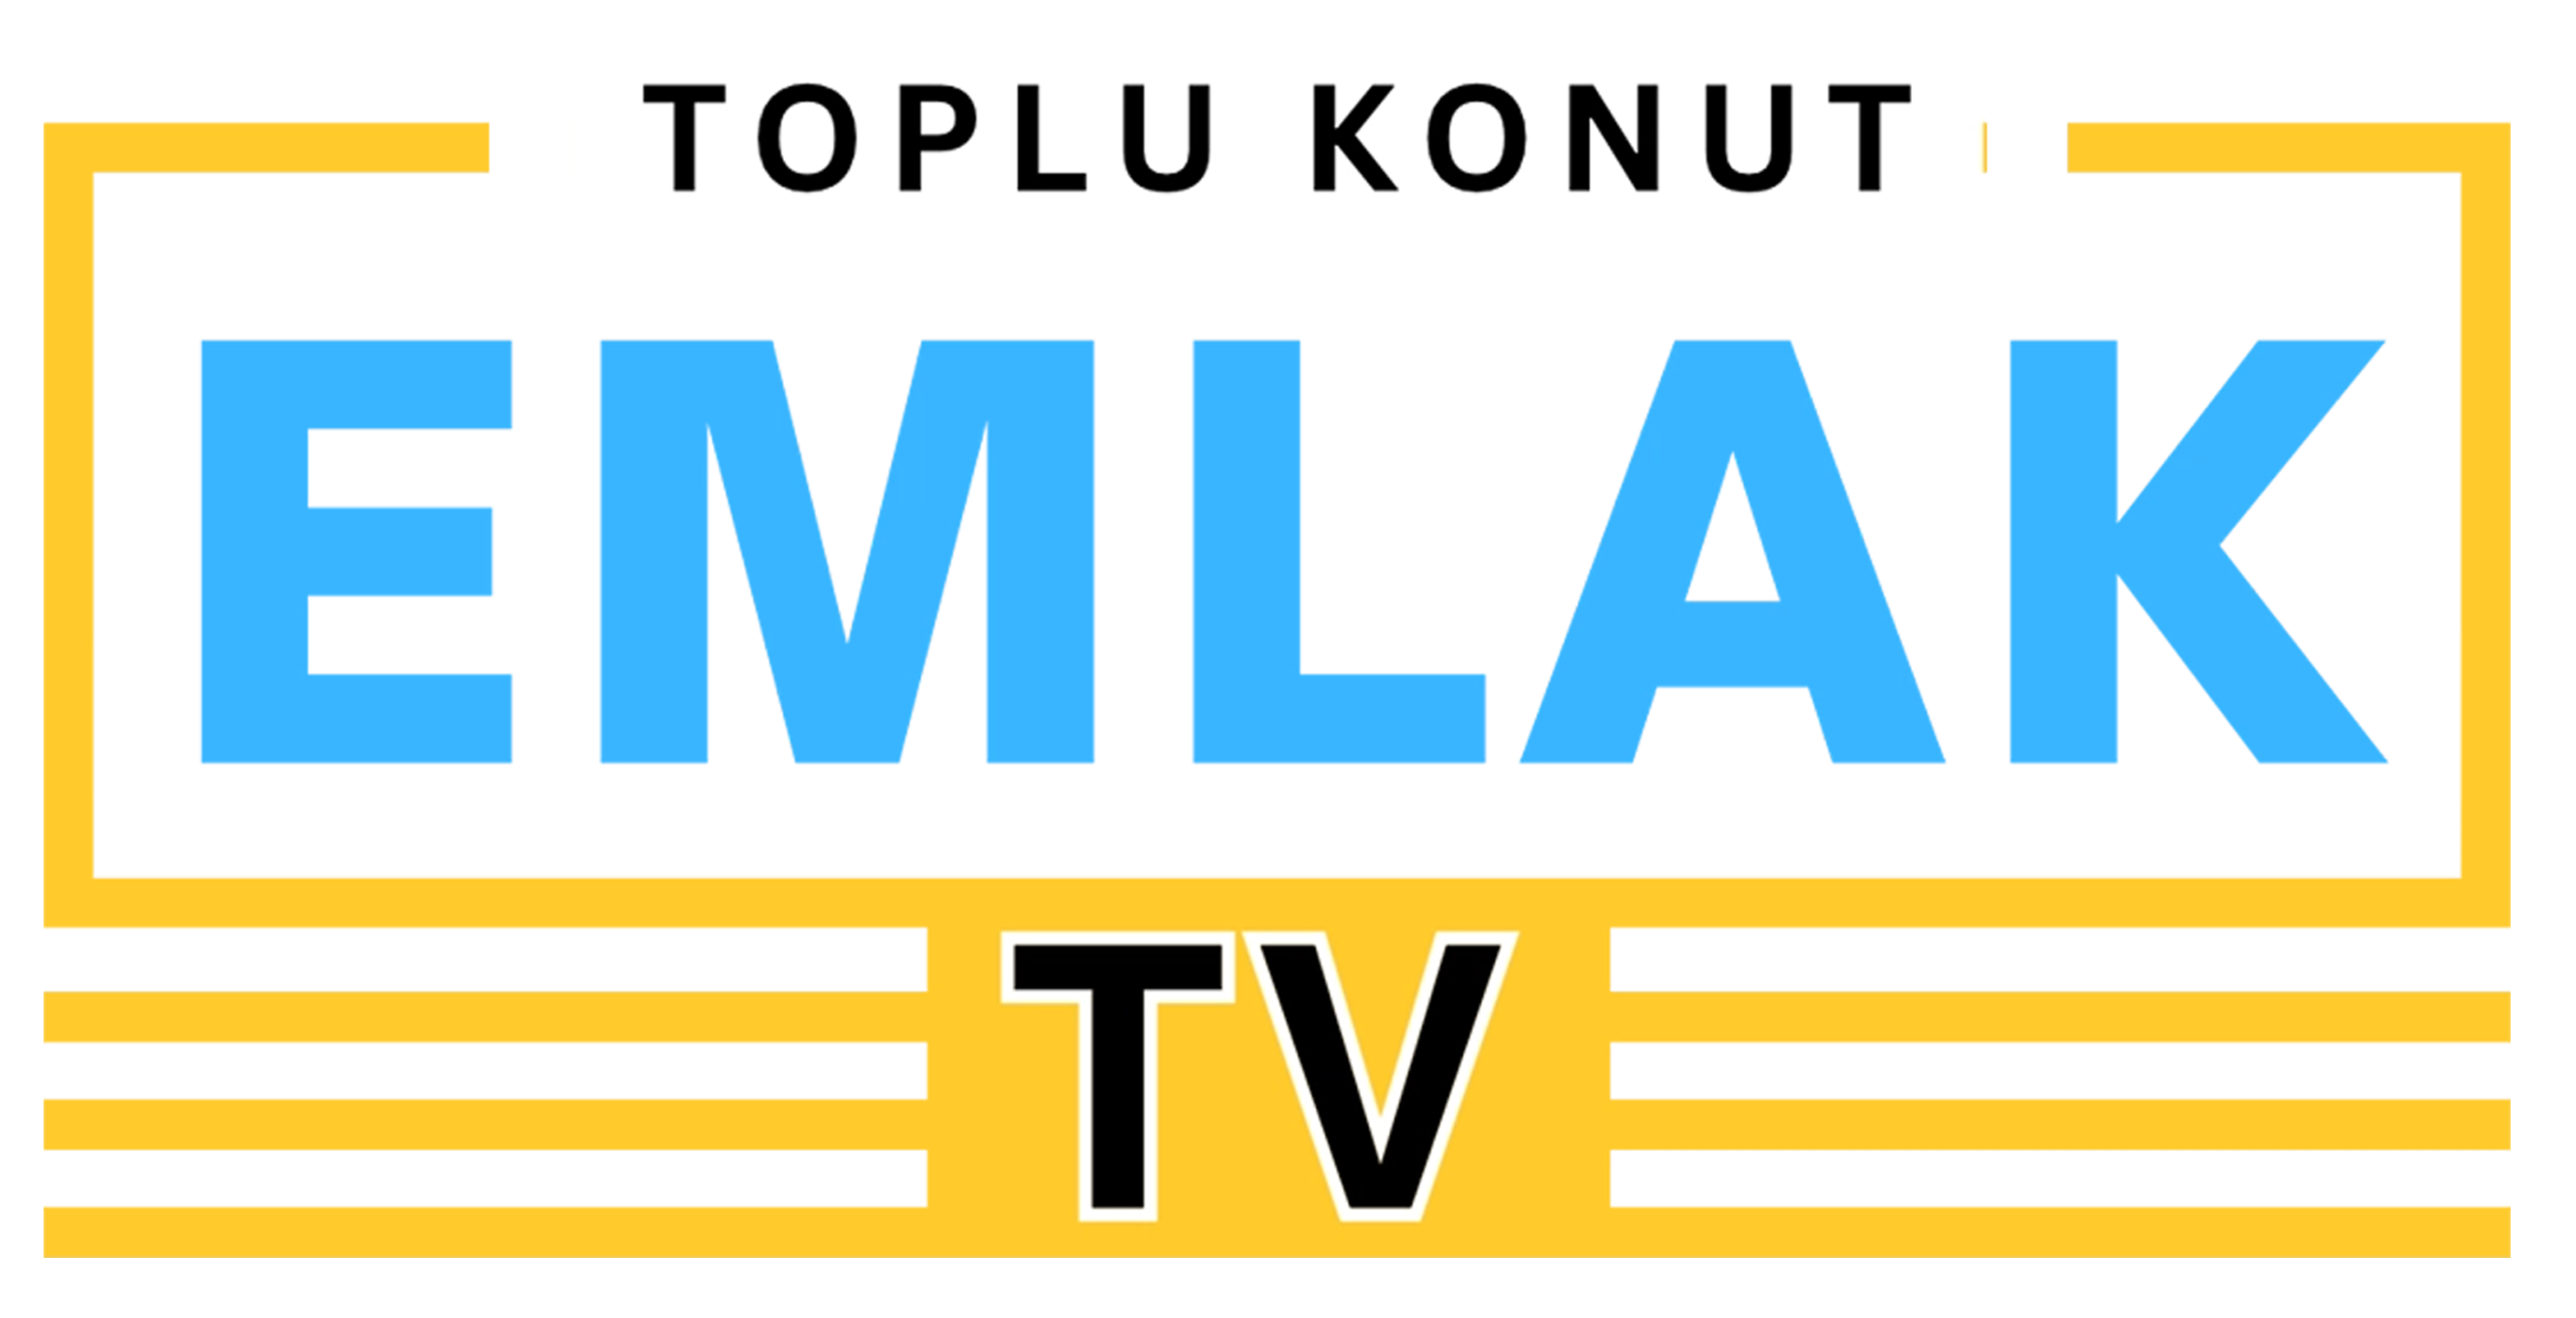 TK EMLAK TV